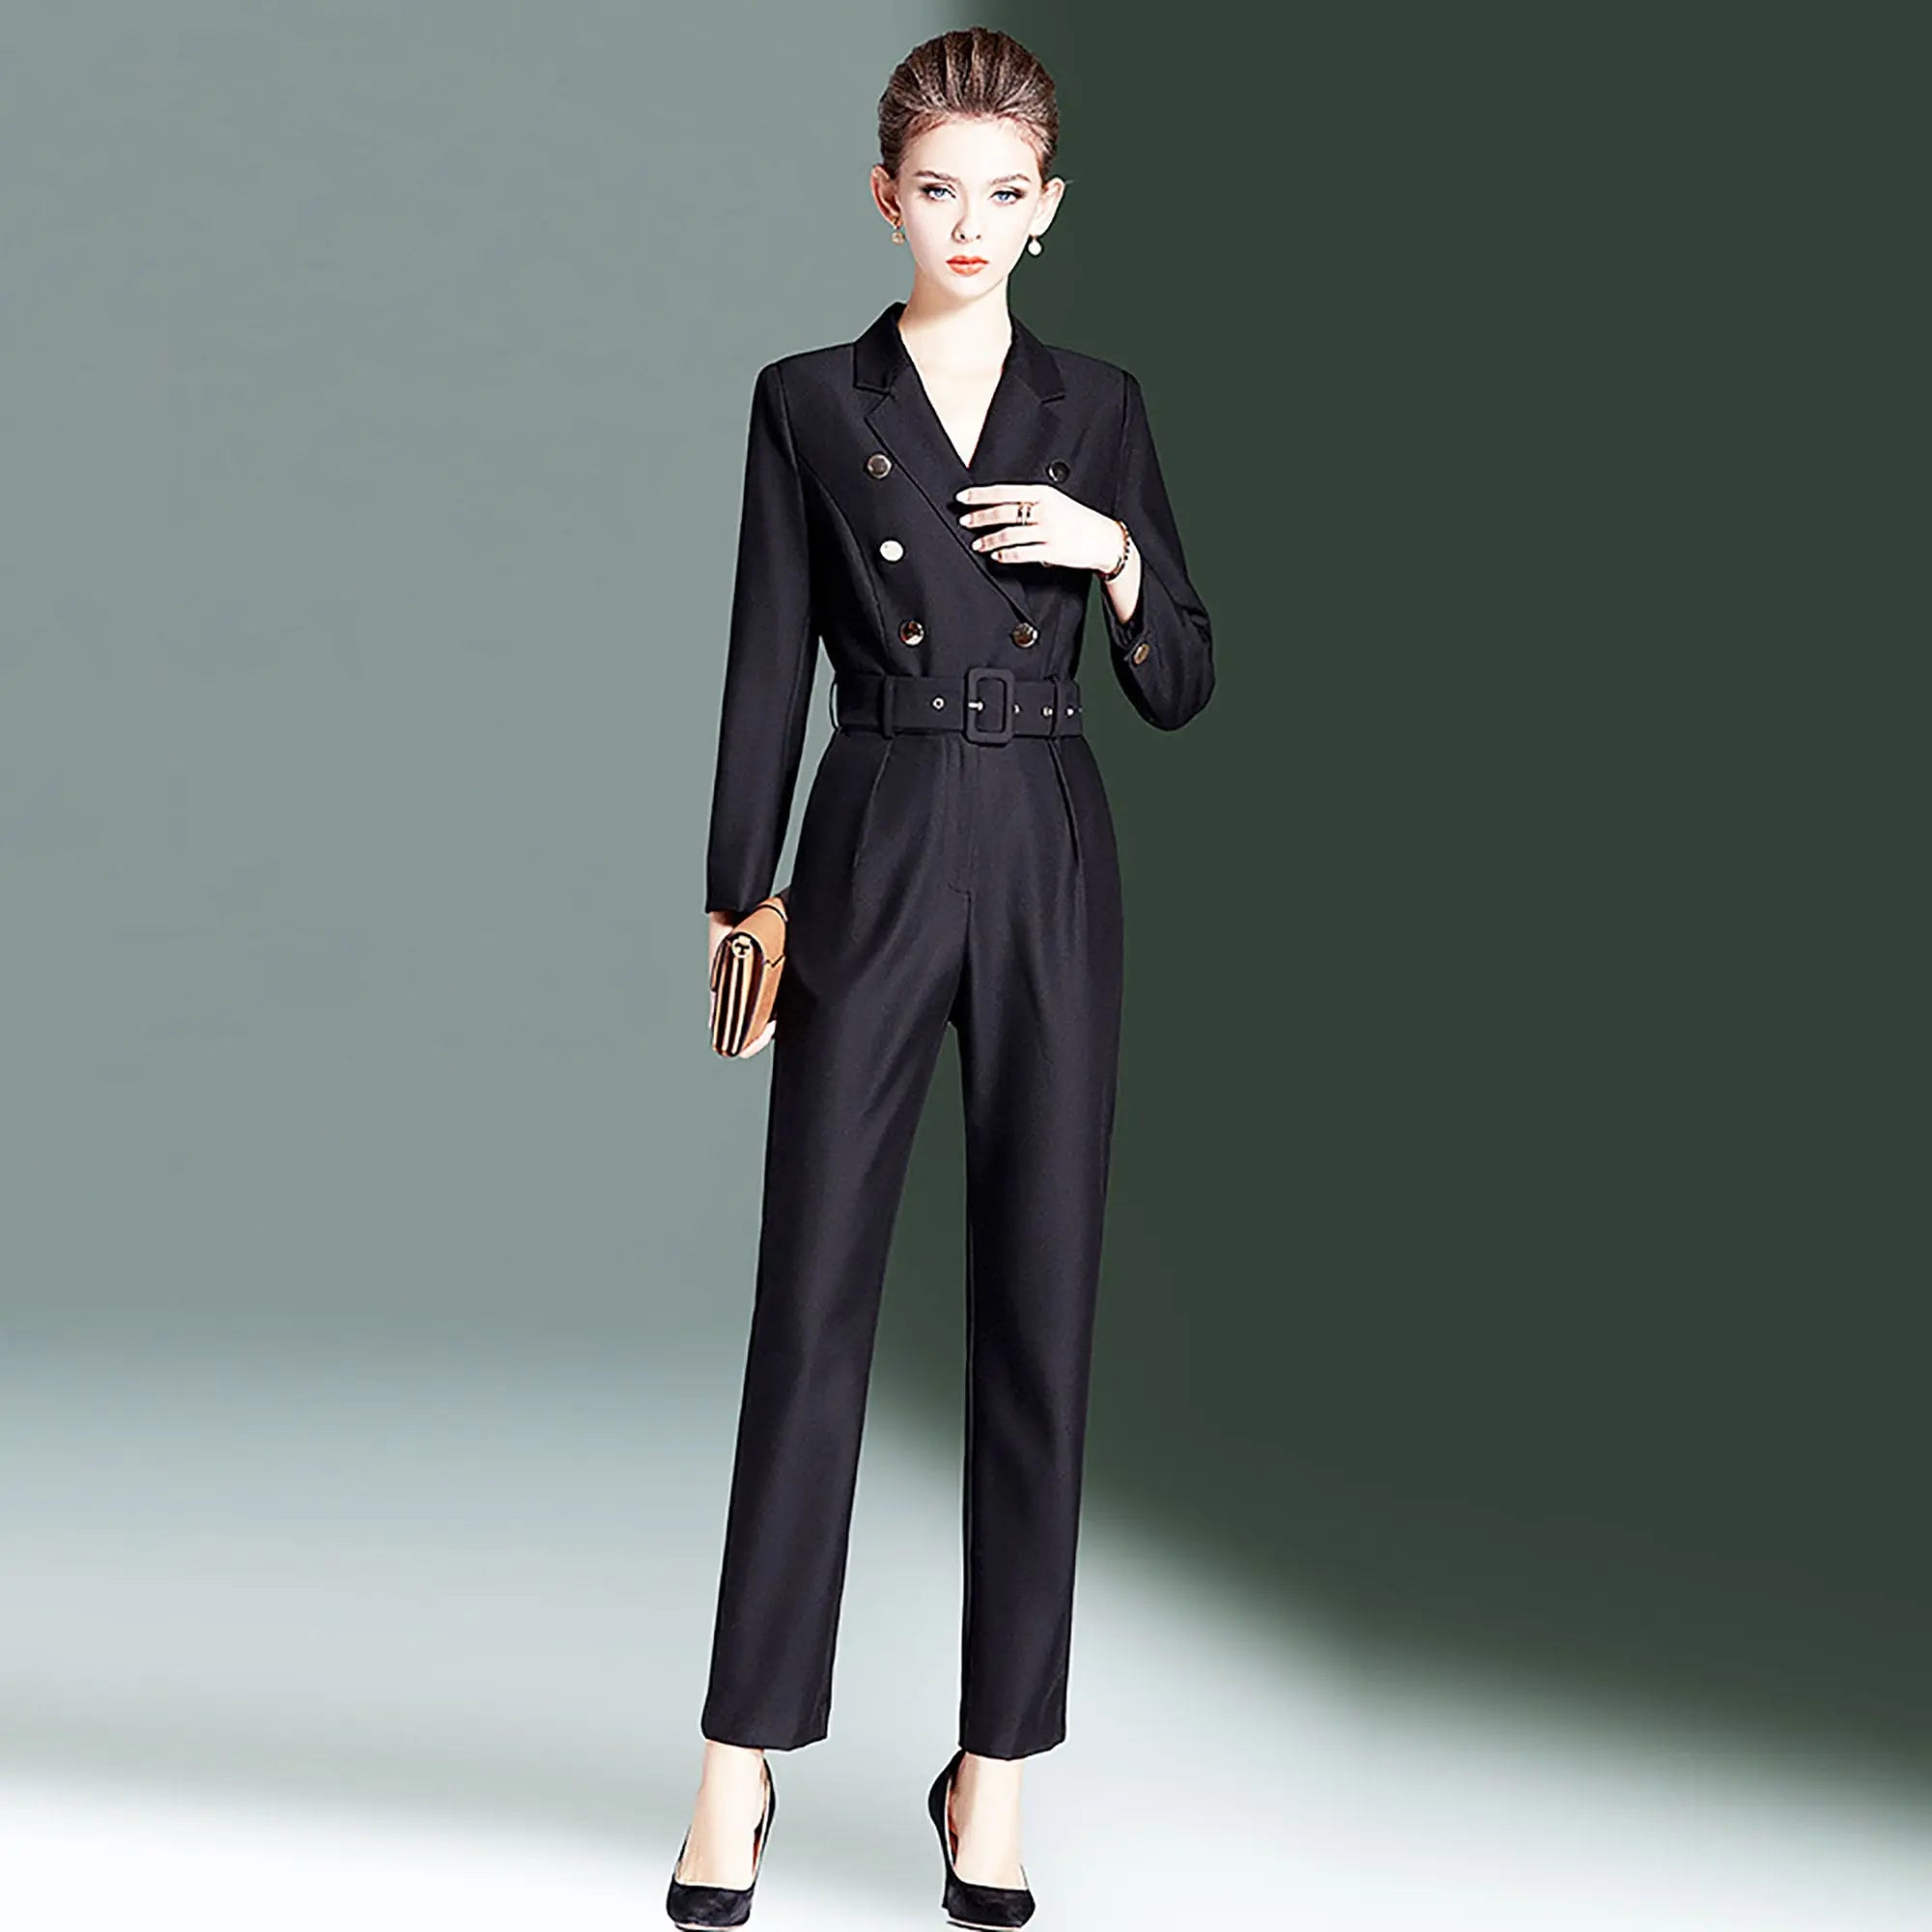 Women's Black Suits & Separates | Nordstrom